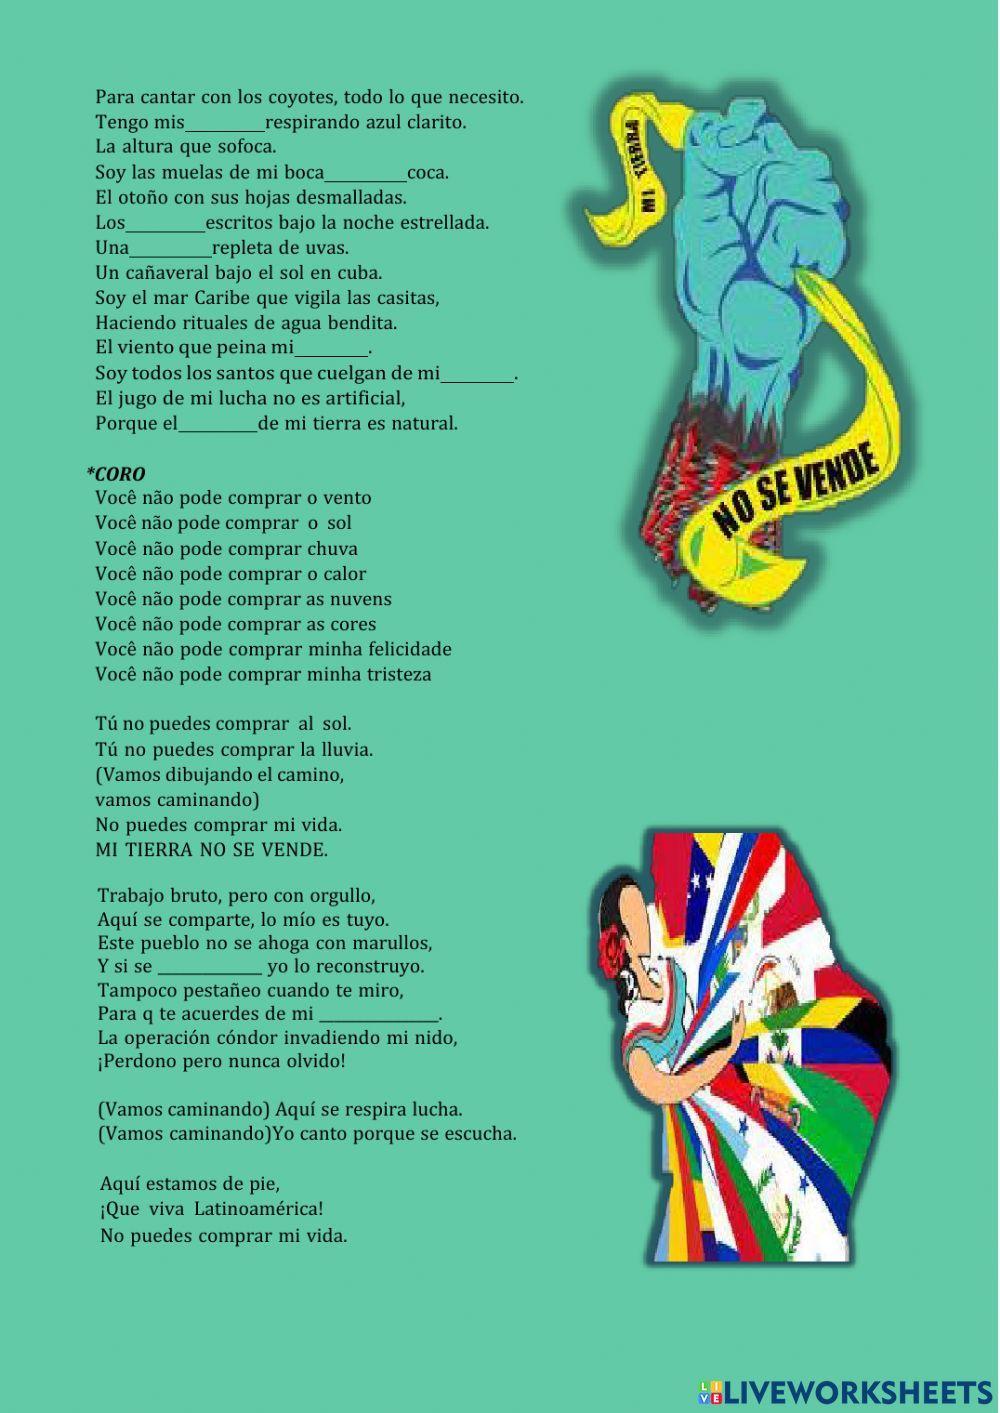 Latinoamerica - Calle 13 interactive worksheet | Live Worksheets